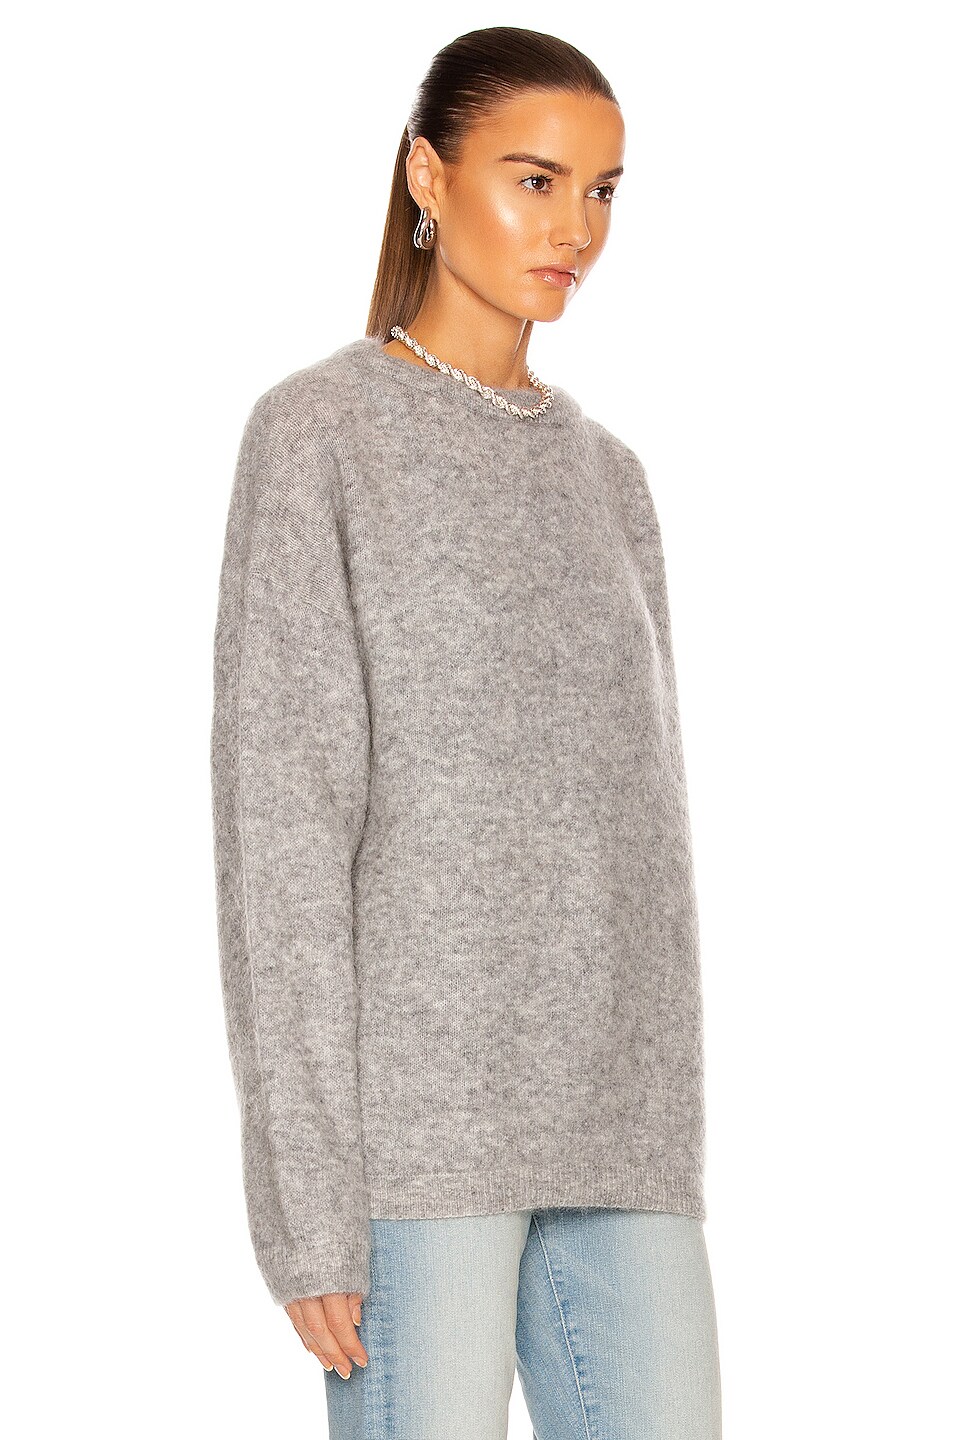 Acne Studios Dramatic Mohair Sweater in Cold Grey Melange | FWRD